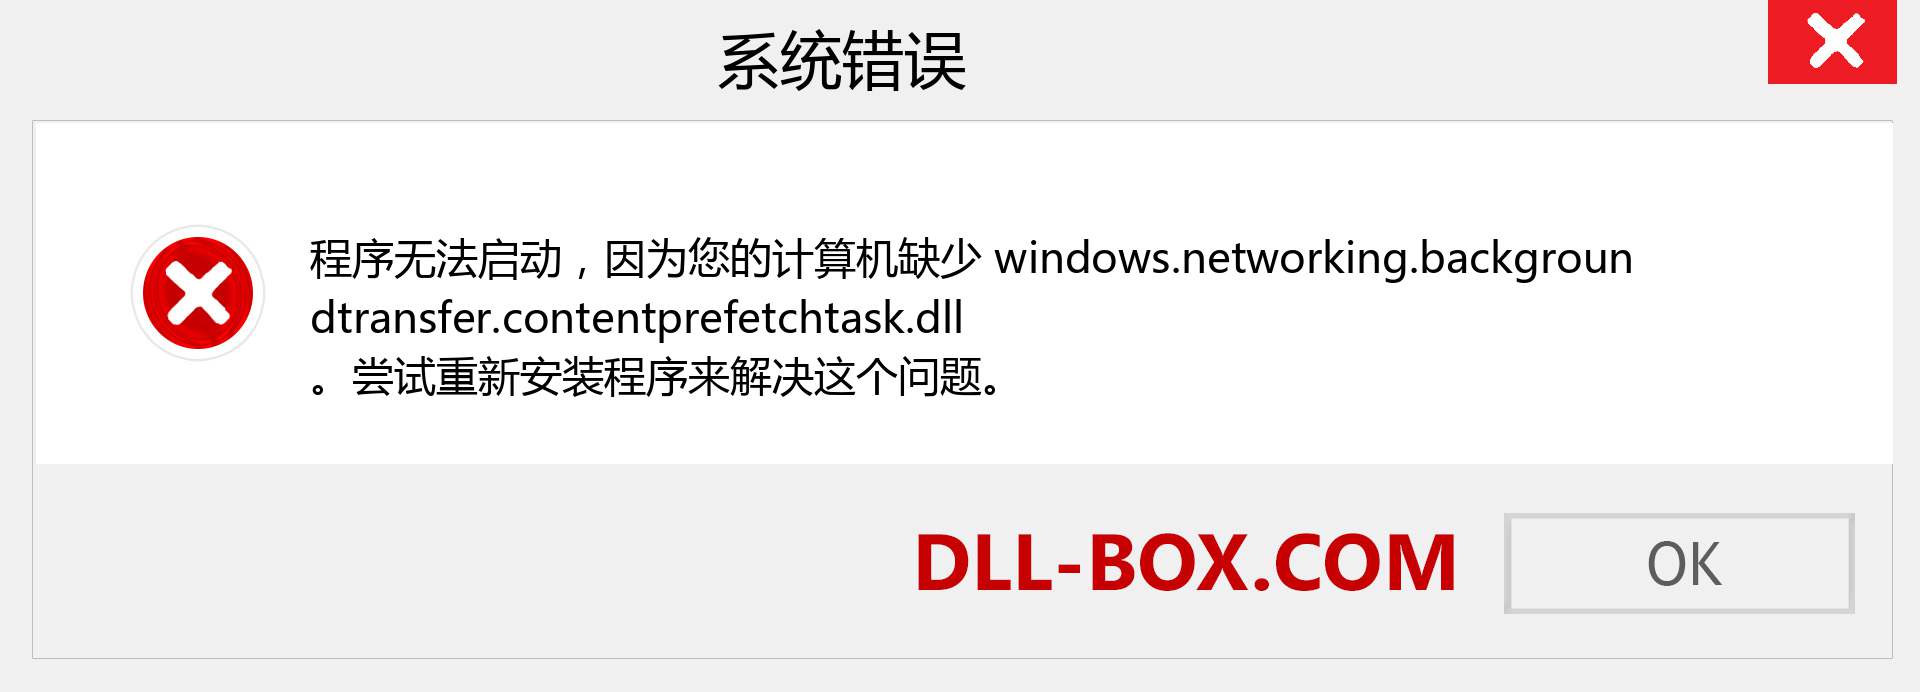 windows.networking.backgroundtransfer.contentprefetchtask.dll 文件丢失？。 适用于 Windows 7、8、10 的下载 - 修复 Windows、照片、图像上的 windows.networking.backgroundtransfer.contentprefetchtask dll 丢失错误